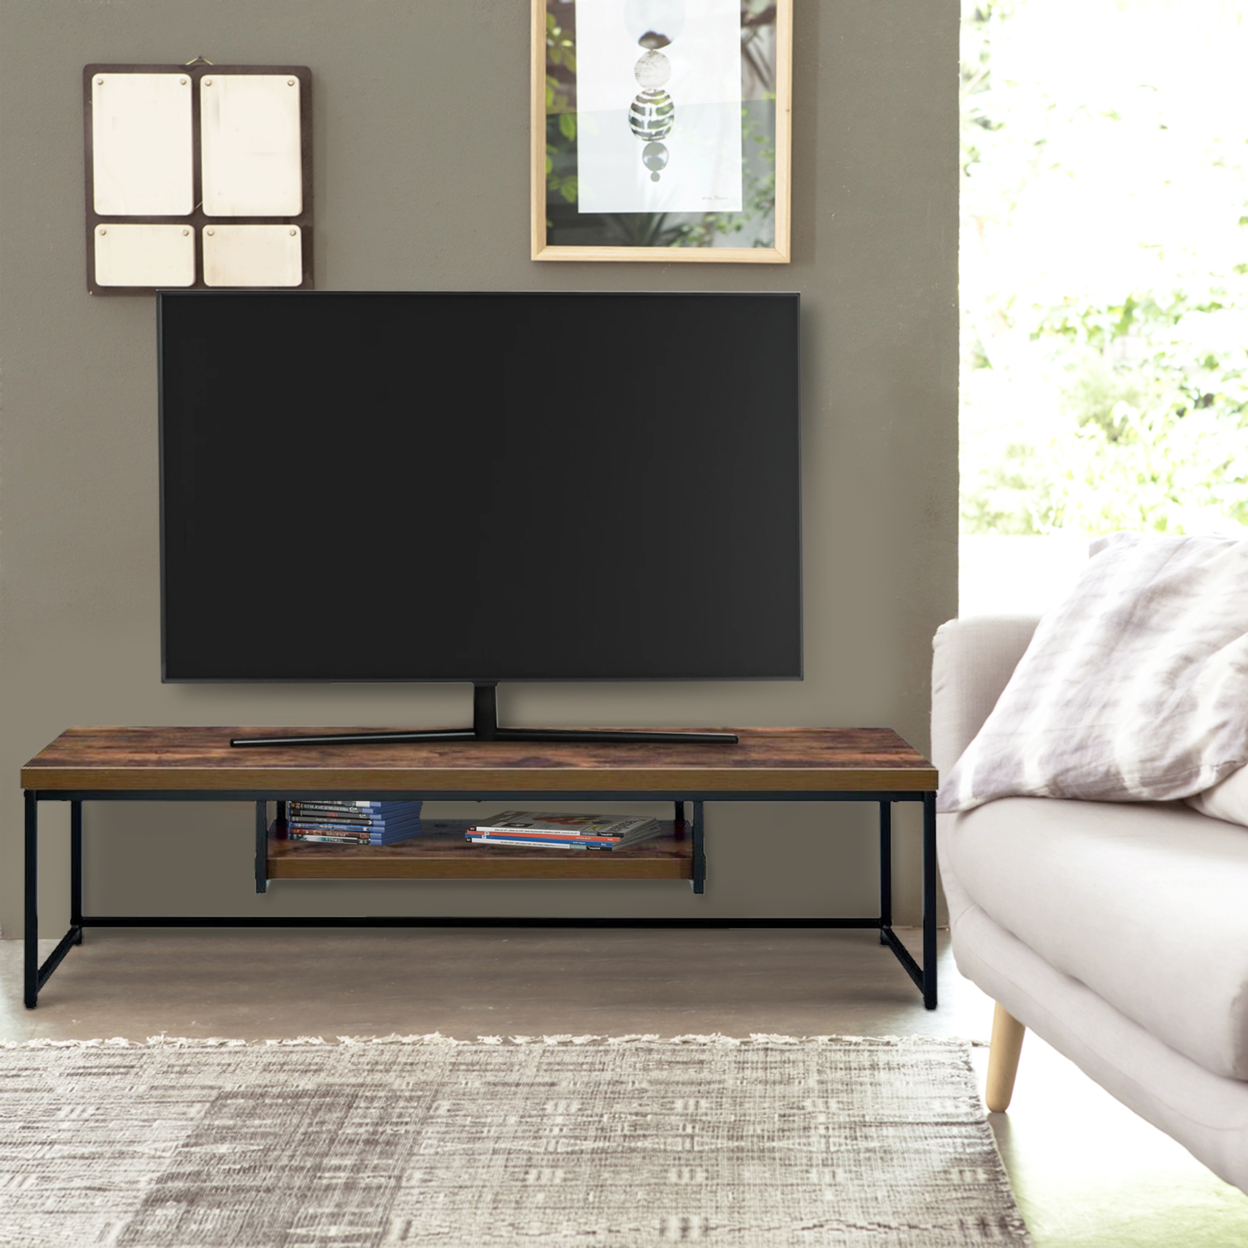 Rectangular Wood And Metal TV Stand With One Shelf, Brown And Black- Saltoro Sherpi